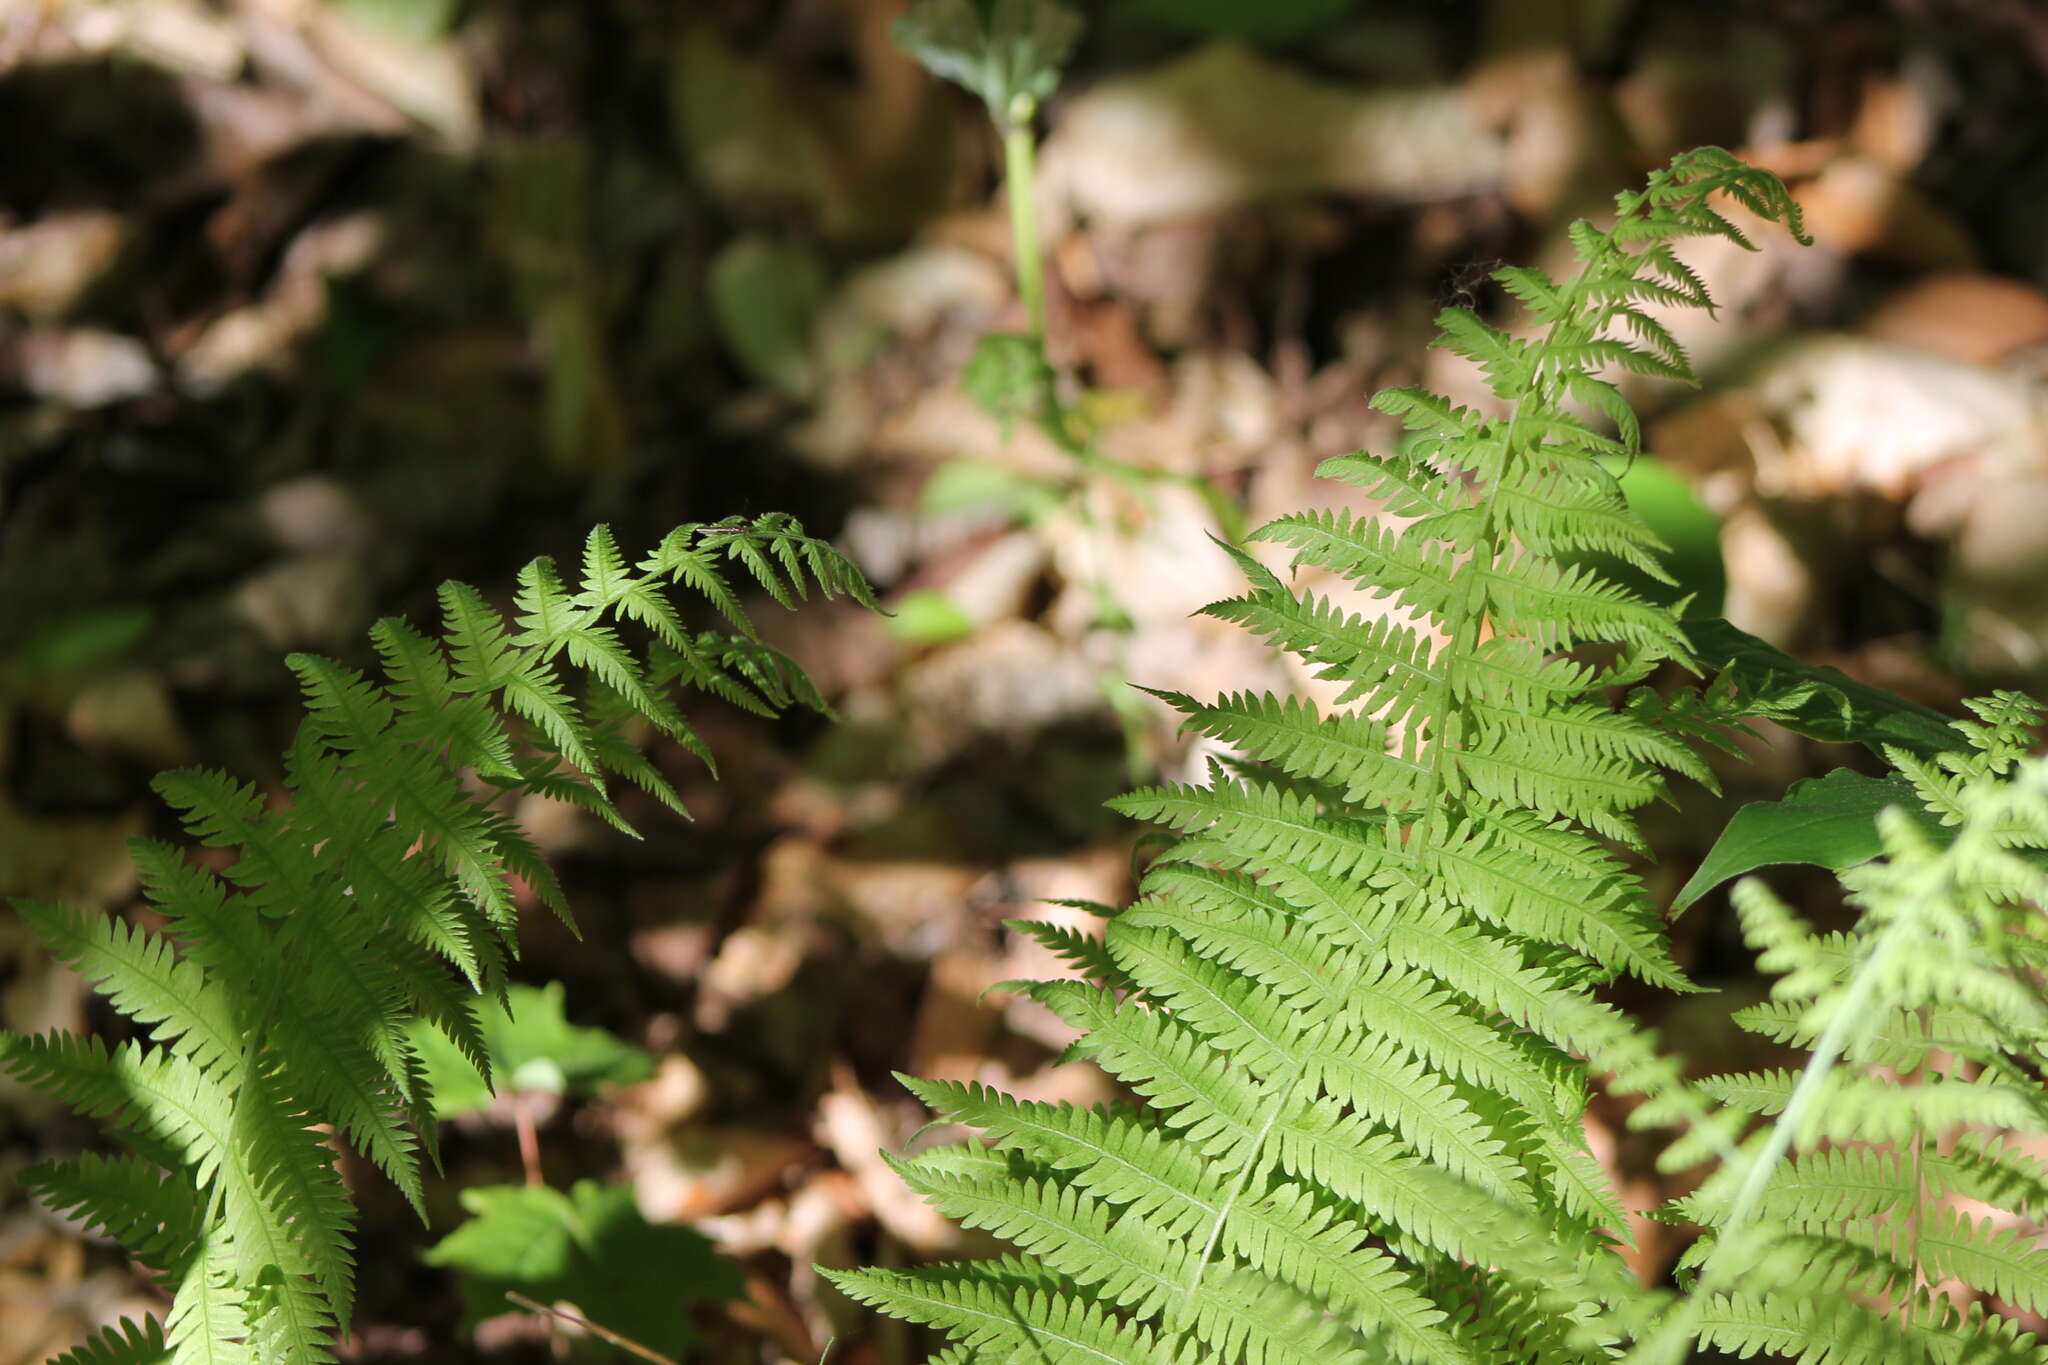 Image of eastern hayscented fern